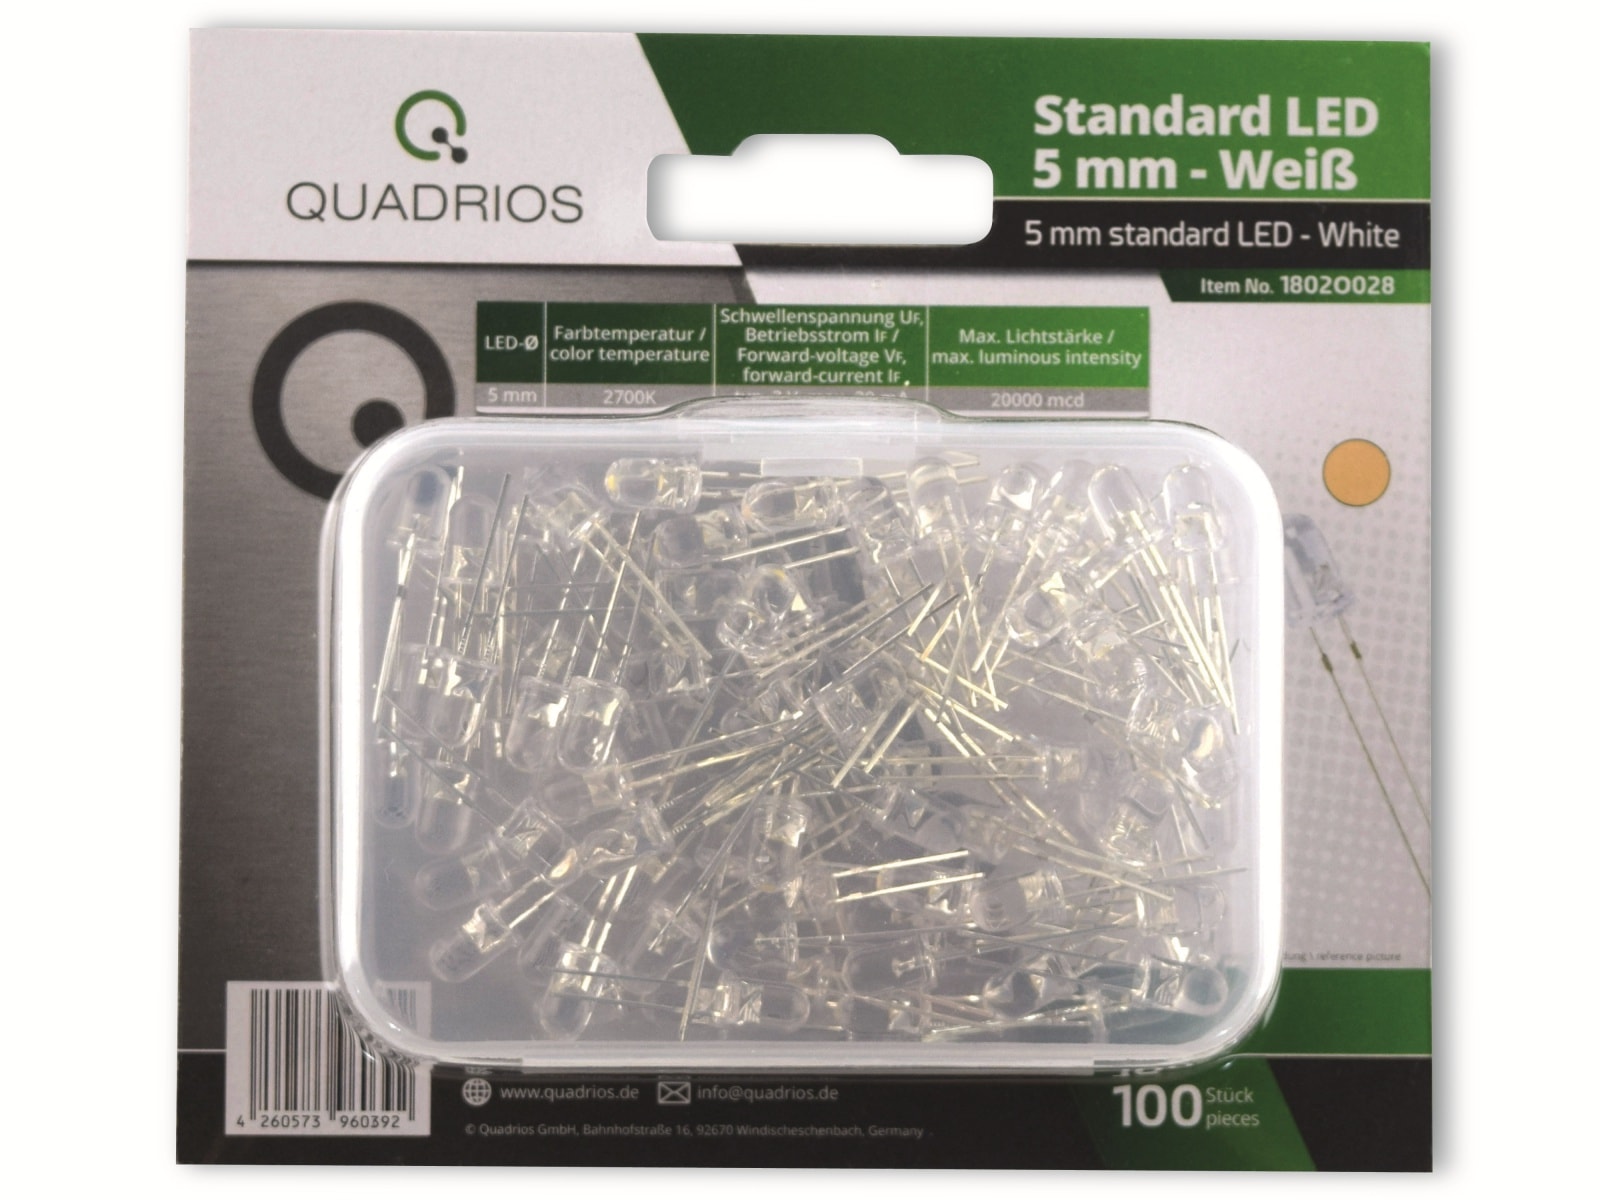 QUADRIOS, 1802O028, LED Sortiment 5 mm Leuchtdioden Warmweiss (20000 mcd) 100 tlg